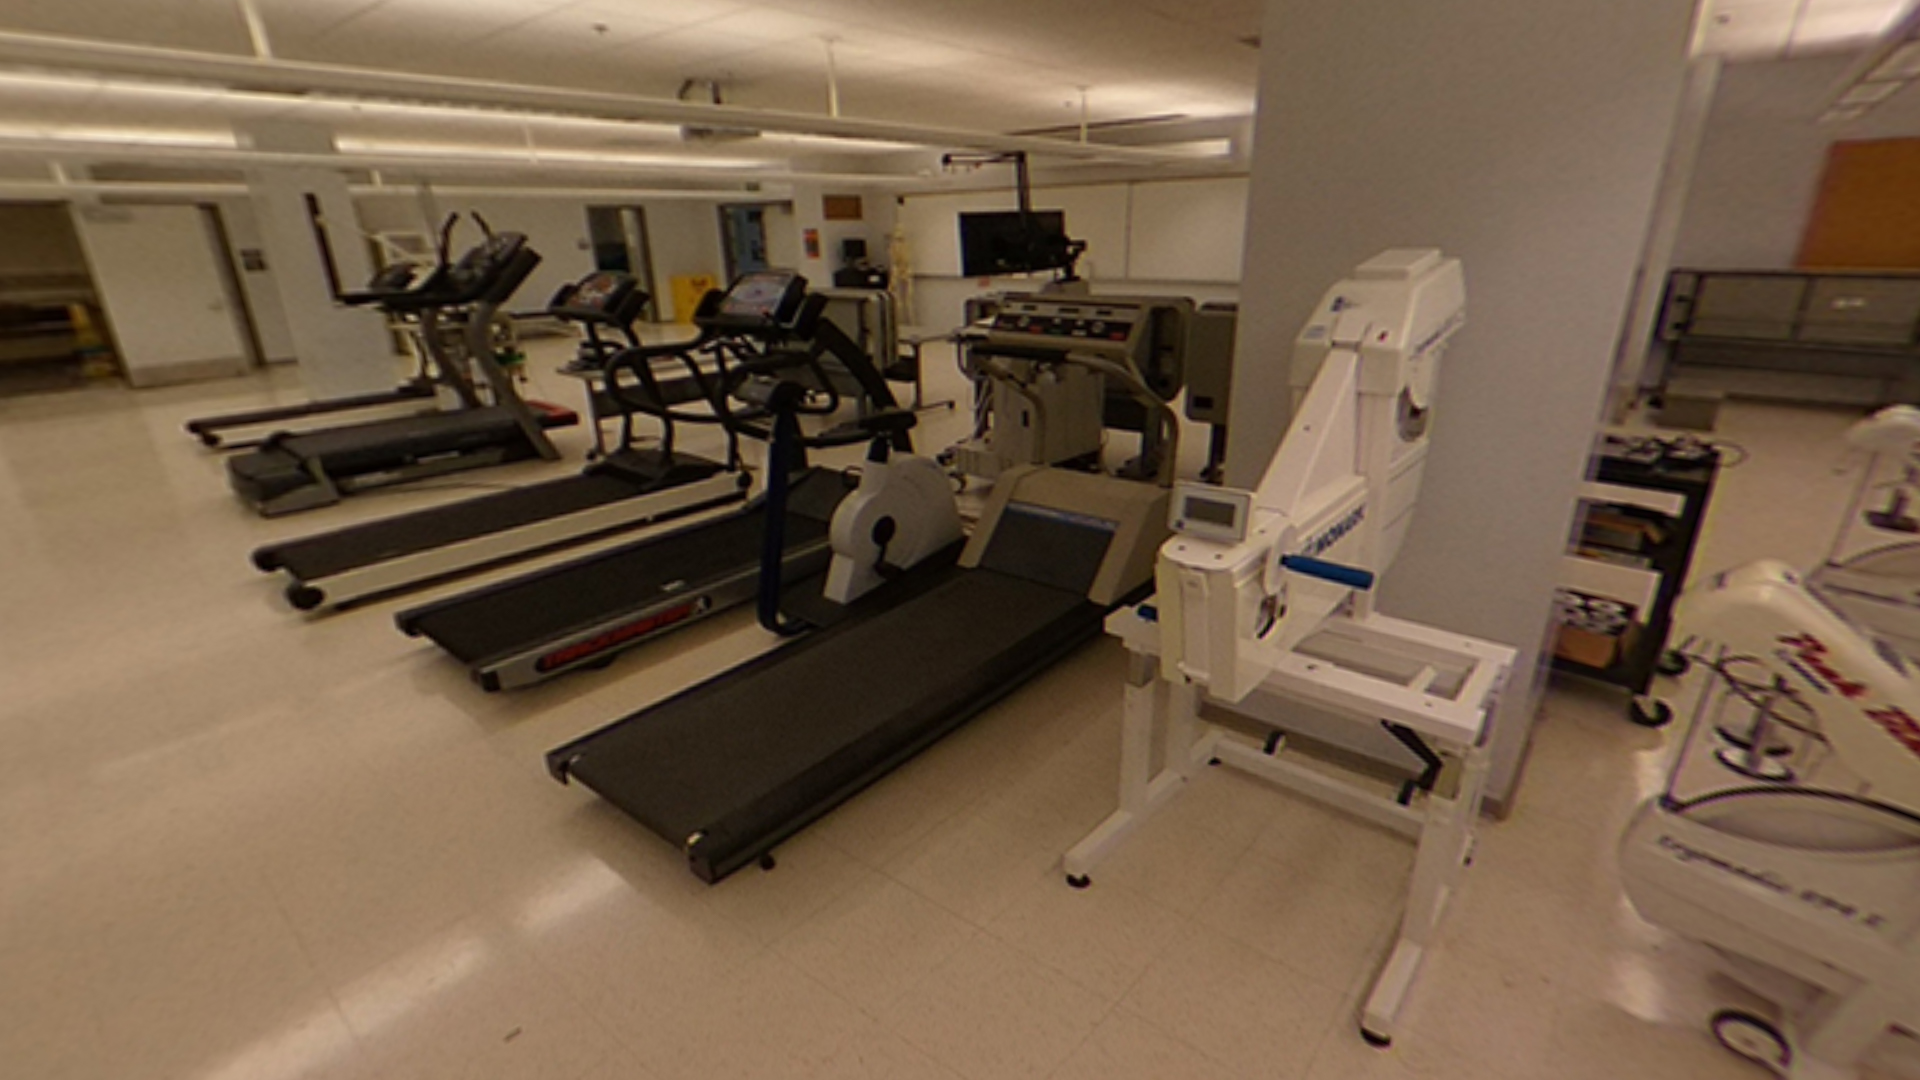 Treadmill machines and upper-body cycle ergometer